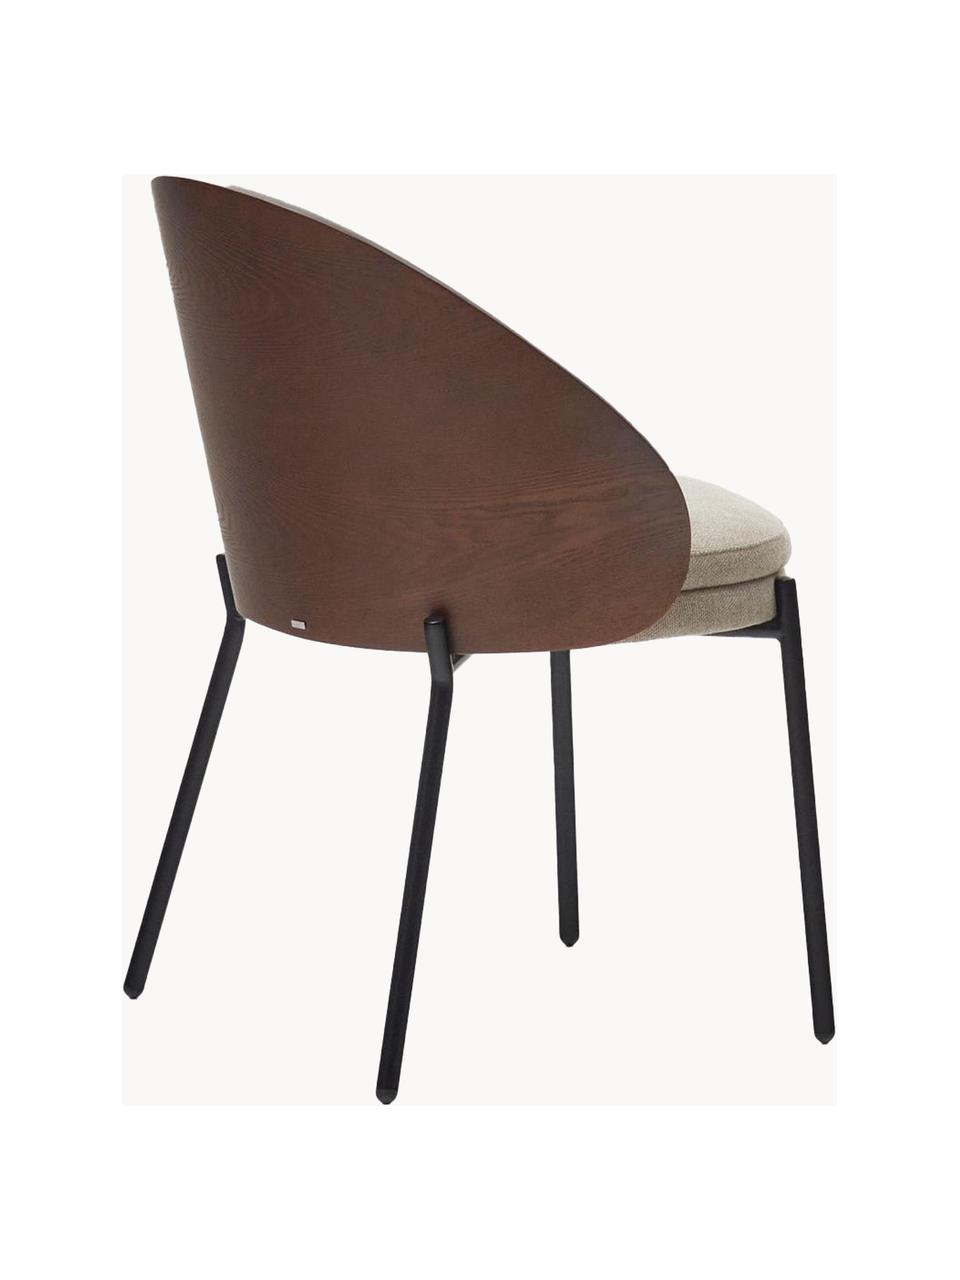 Žinylková polstrovaná židle Eamy, Béžová, černá, Š 55 cm, H 53 cm